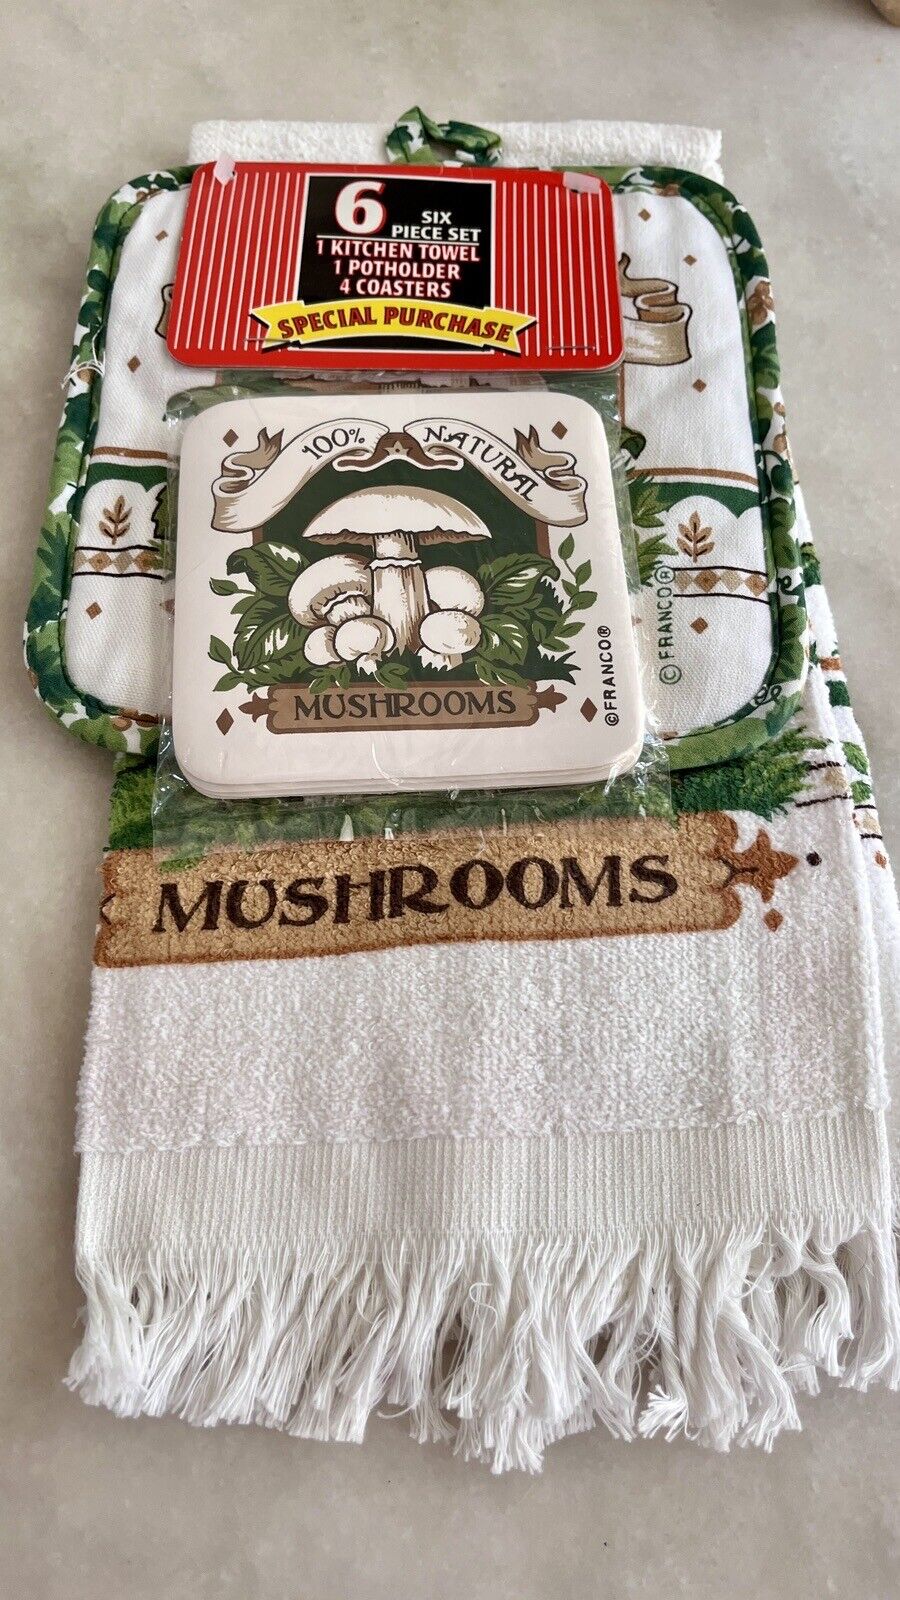 Vintage Mushroom Kitchen Towel Hand Set FRANCO Pot Holder Coasters NEW w TAGS